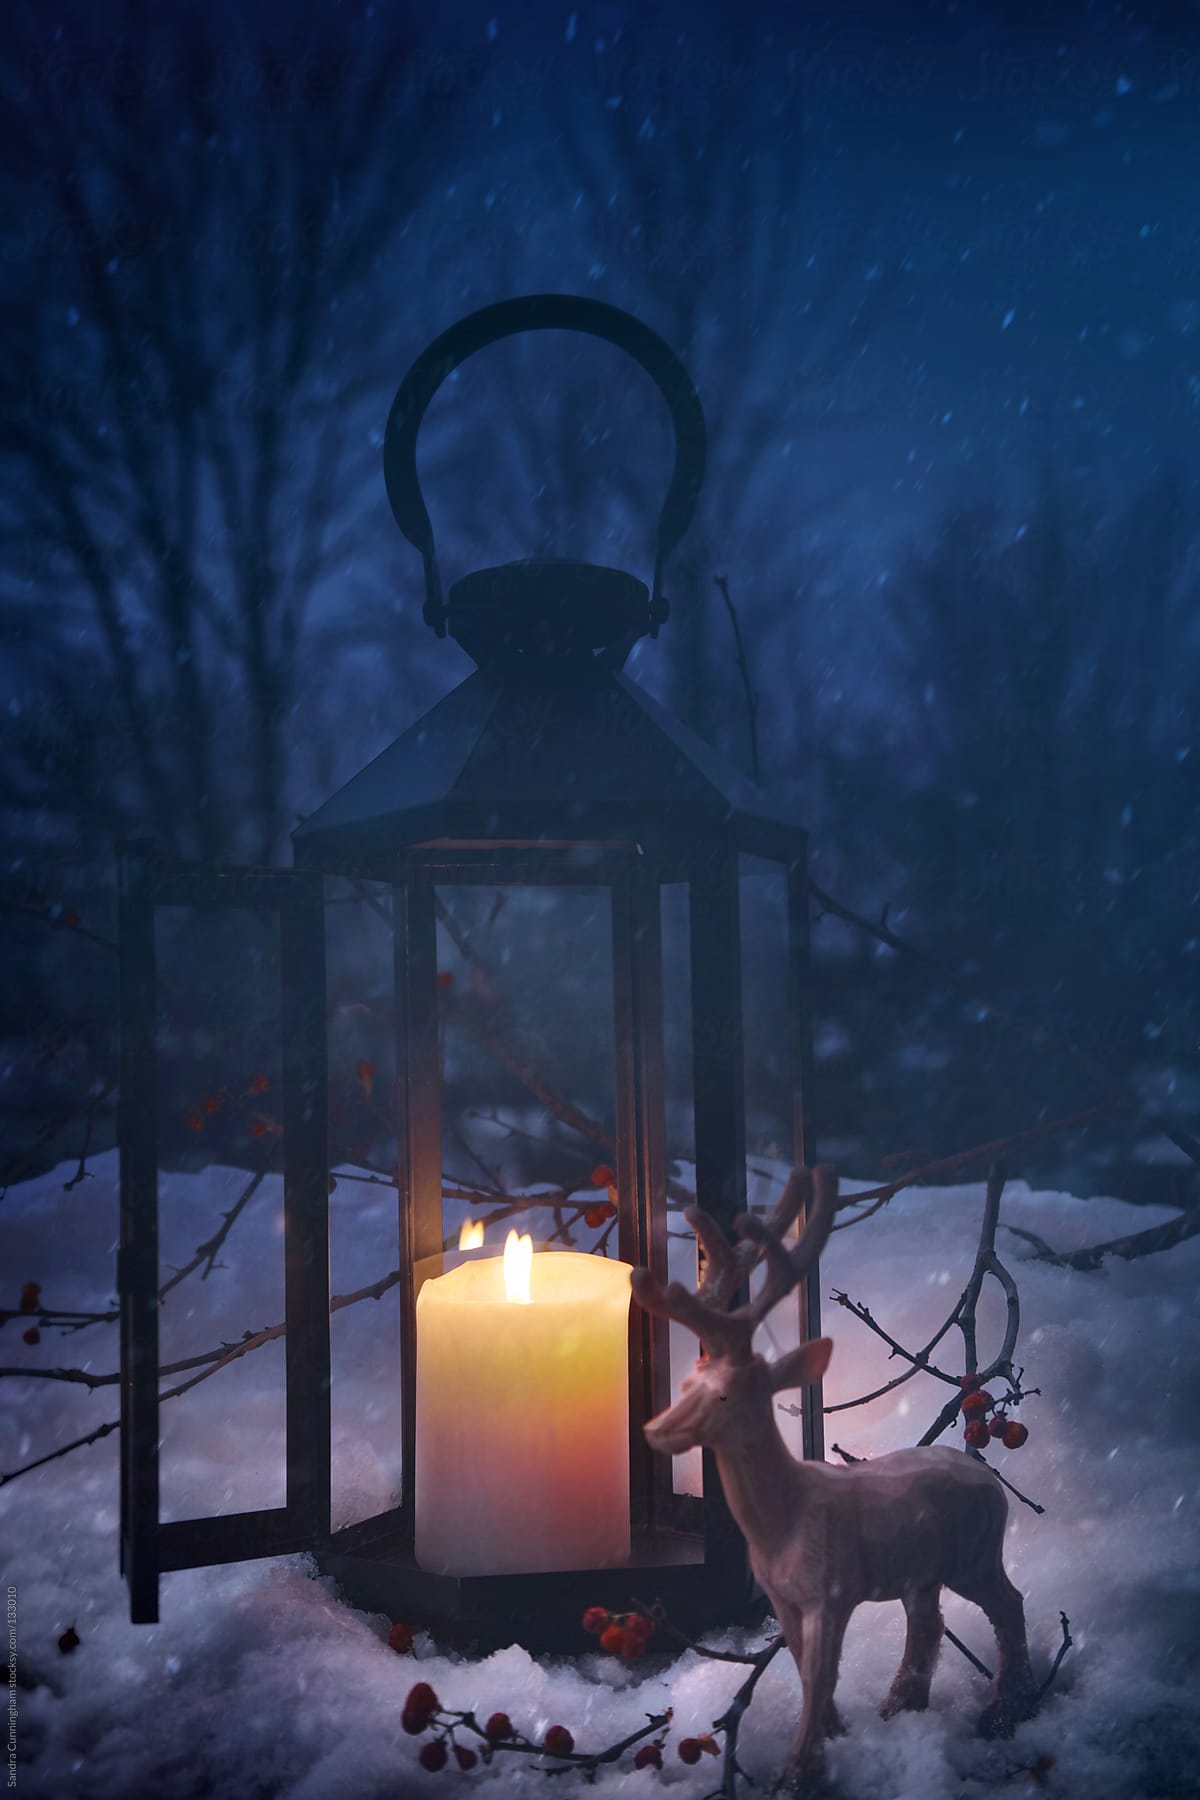 Lit lantern in the snow on a snowy night